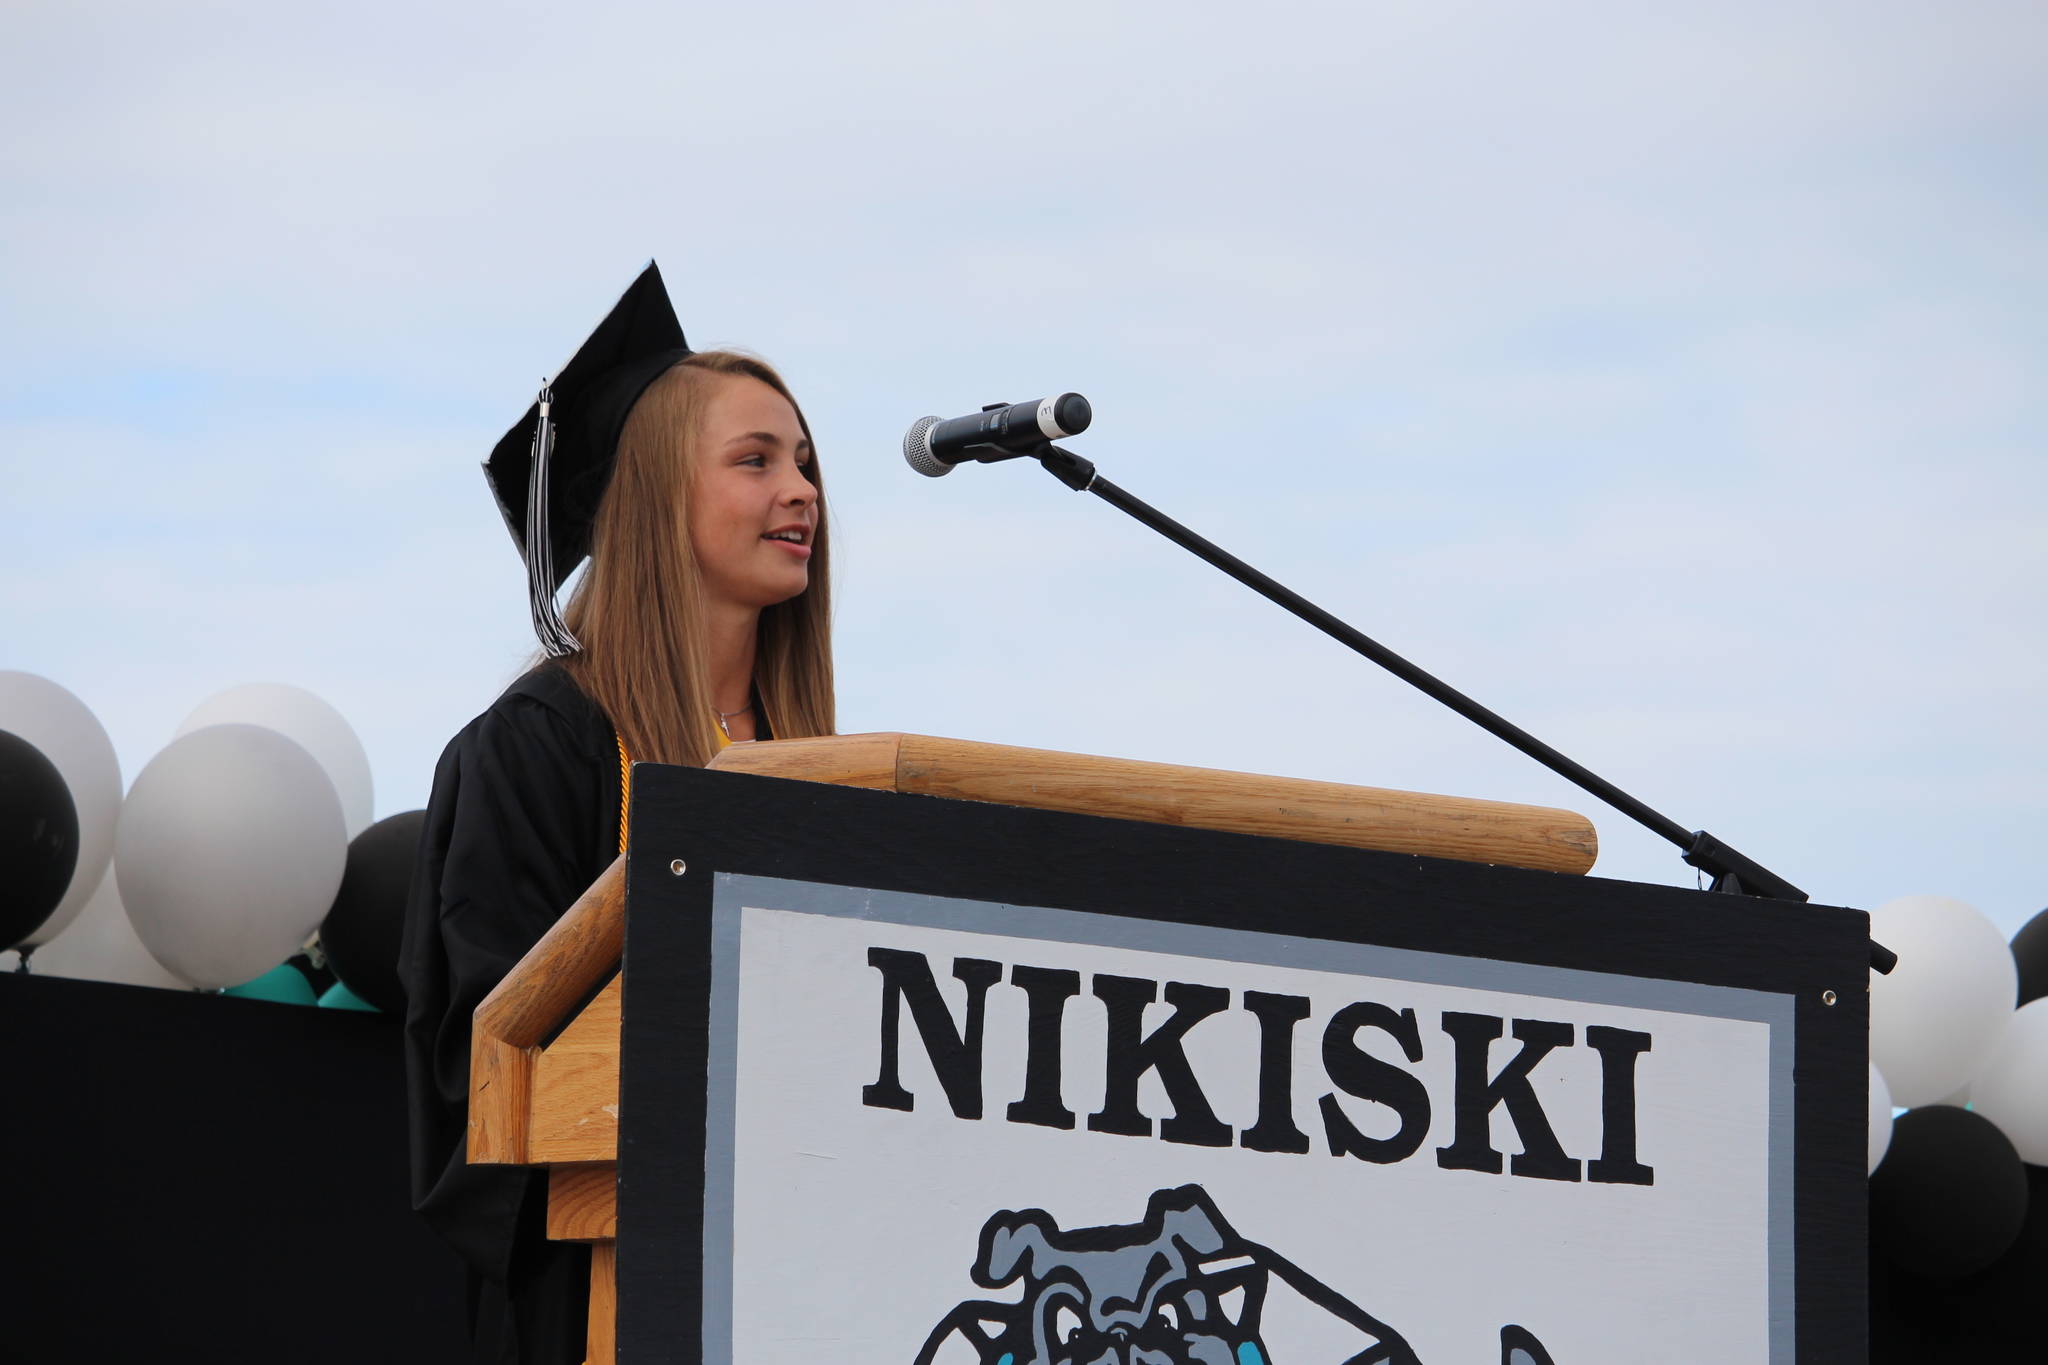 Class valedictorian Kaitlyn Johnson gives a speech during the 2020 Nikiski High School Graduation Commencement Ceremony in Nikiski, Alaska on May 19, 2020. (Photo by Brian Mazurek/Peninsula Clarion)